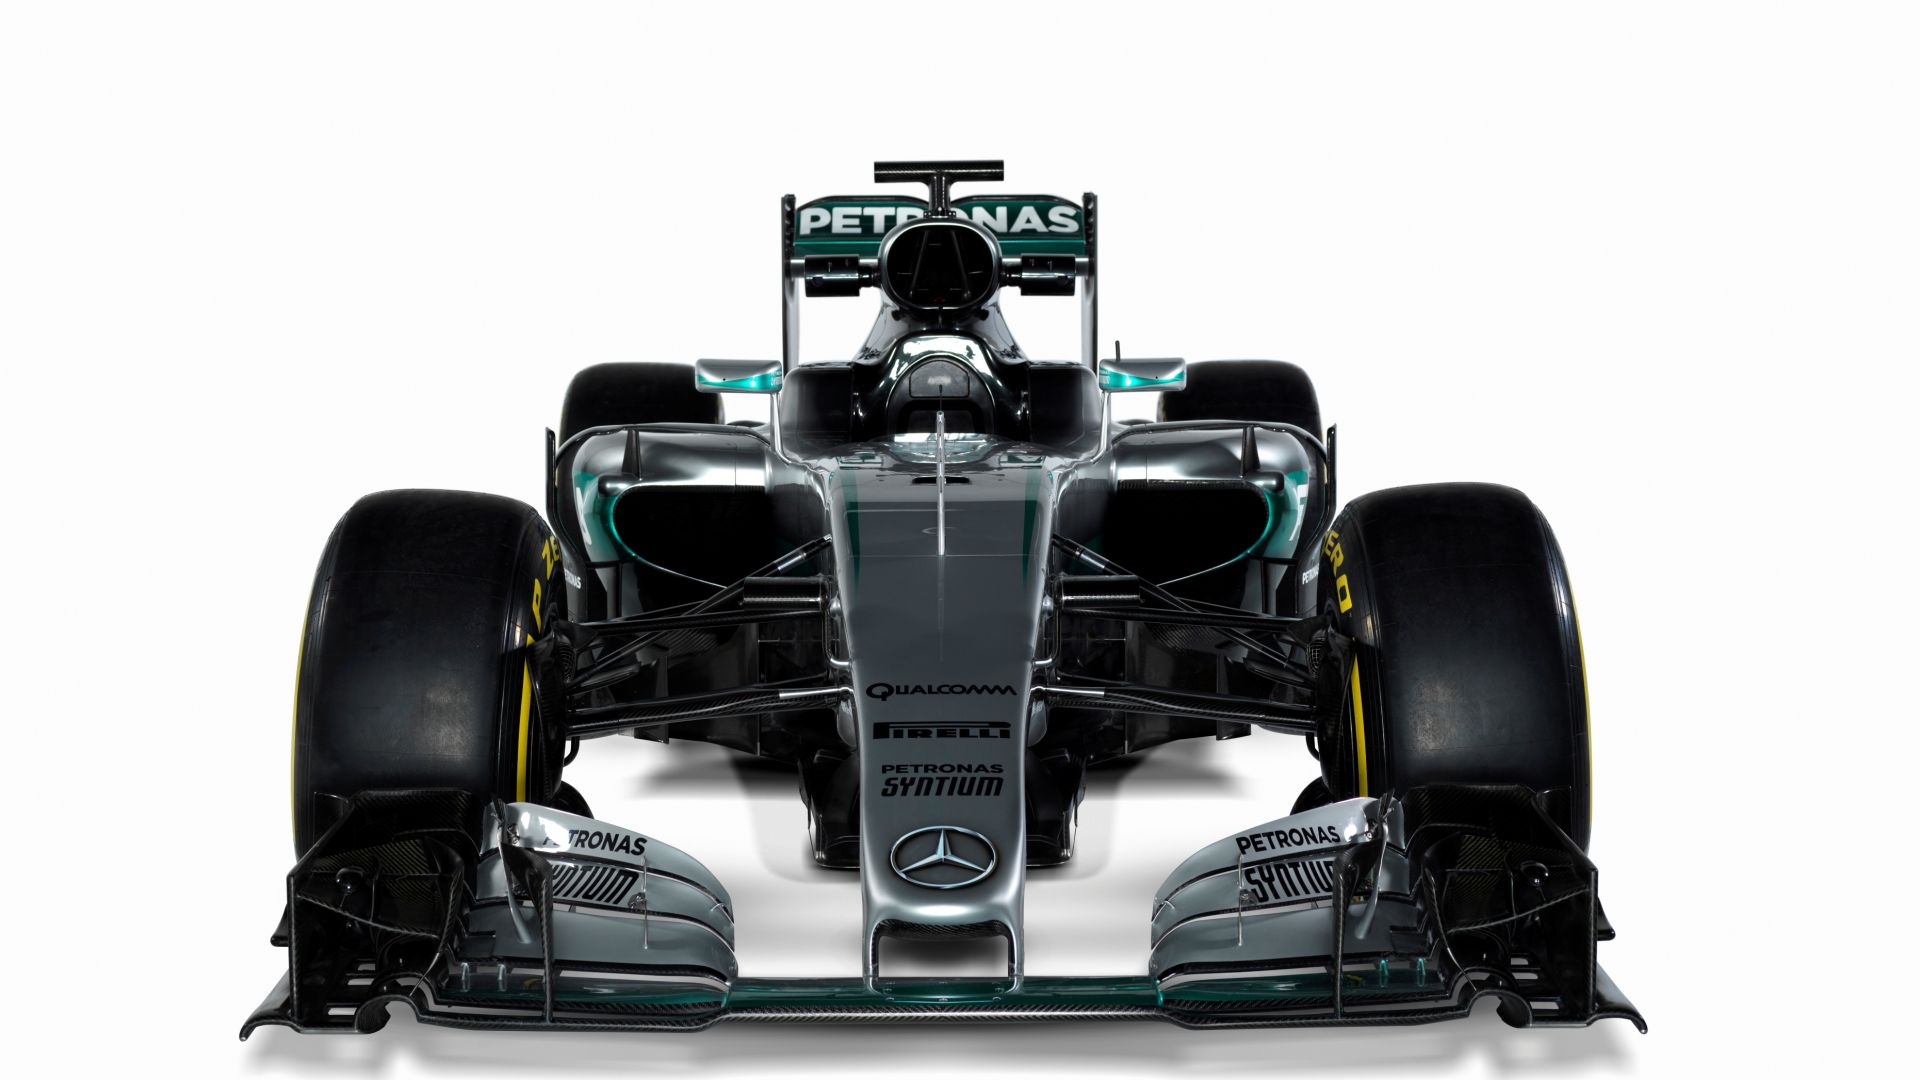 Mercedes AMG F1 W07, Hybrid, Formula 1, testing, LIVE from Barcelona, F1 (horizontal)